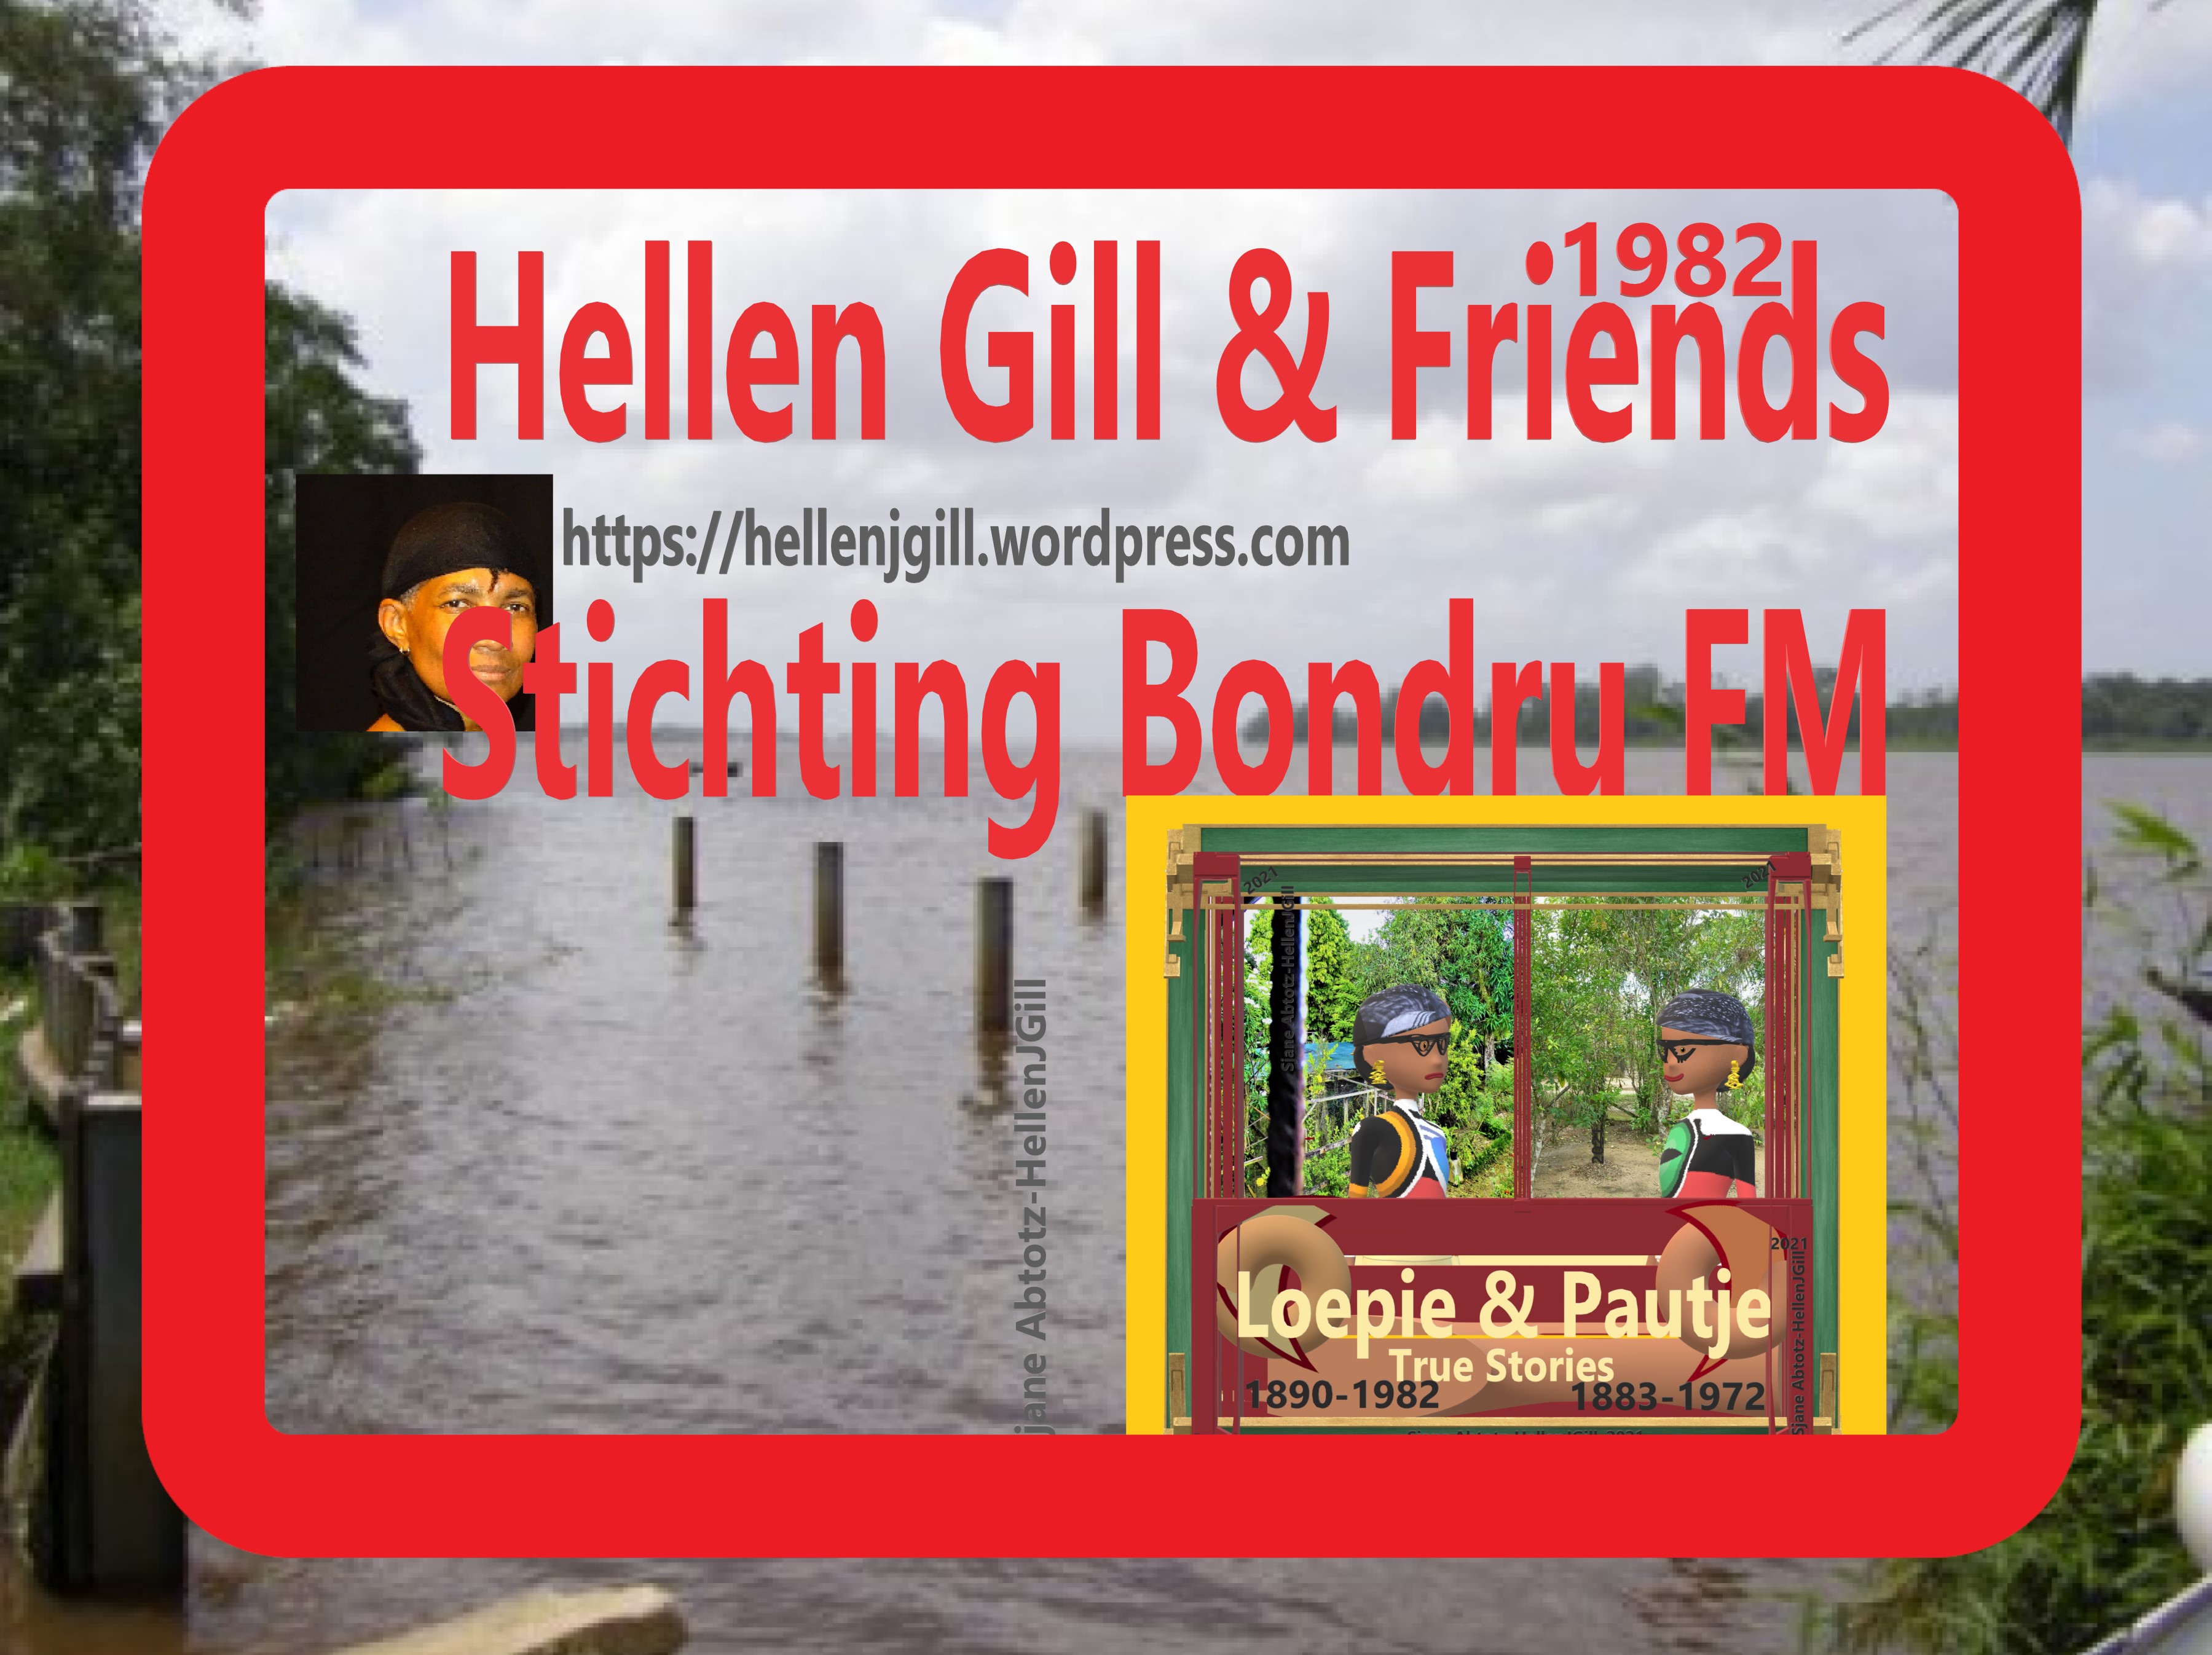 Hellen Gill and Friends by HellenJGill